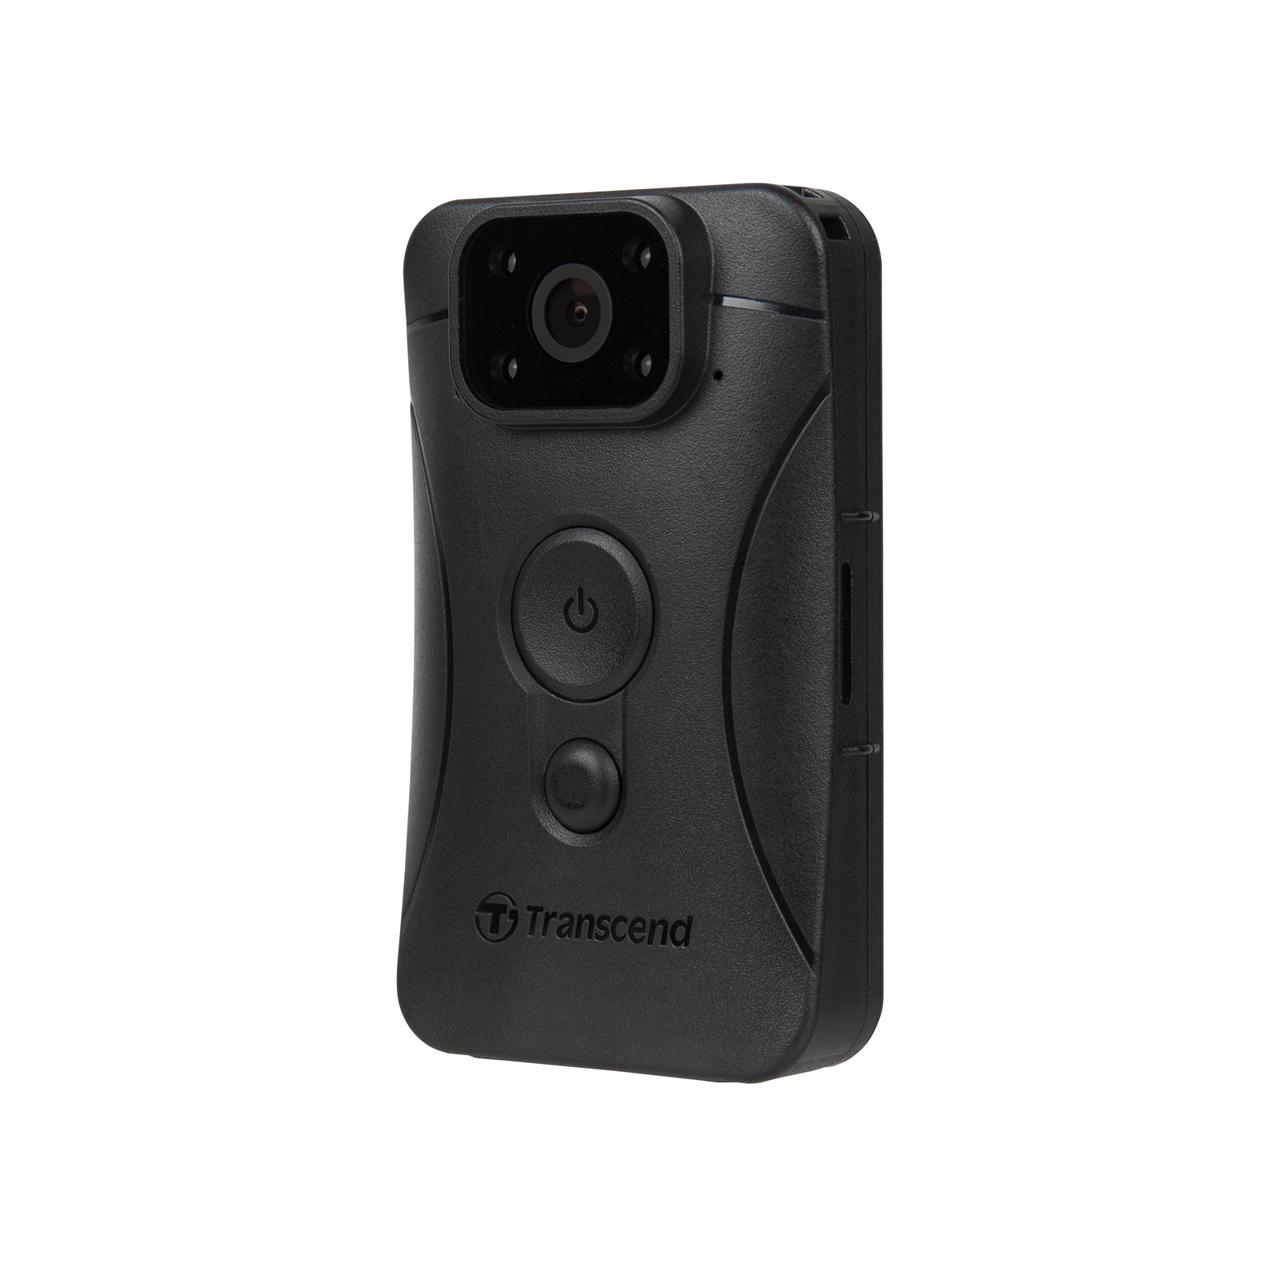 Transcend ボディカメラ DrivePro Body 10（フルHD録画対応・防水規格IPX4対応・警備業務向け・microSDカード32GB付属）  TS32GDPB10B |サンワダイレクト